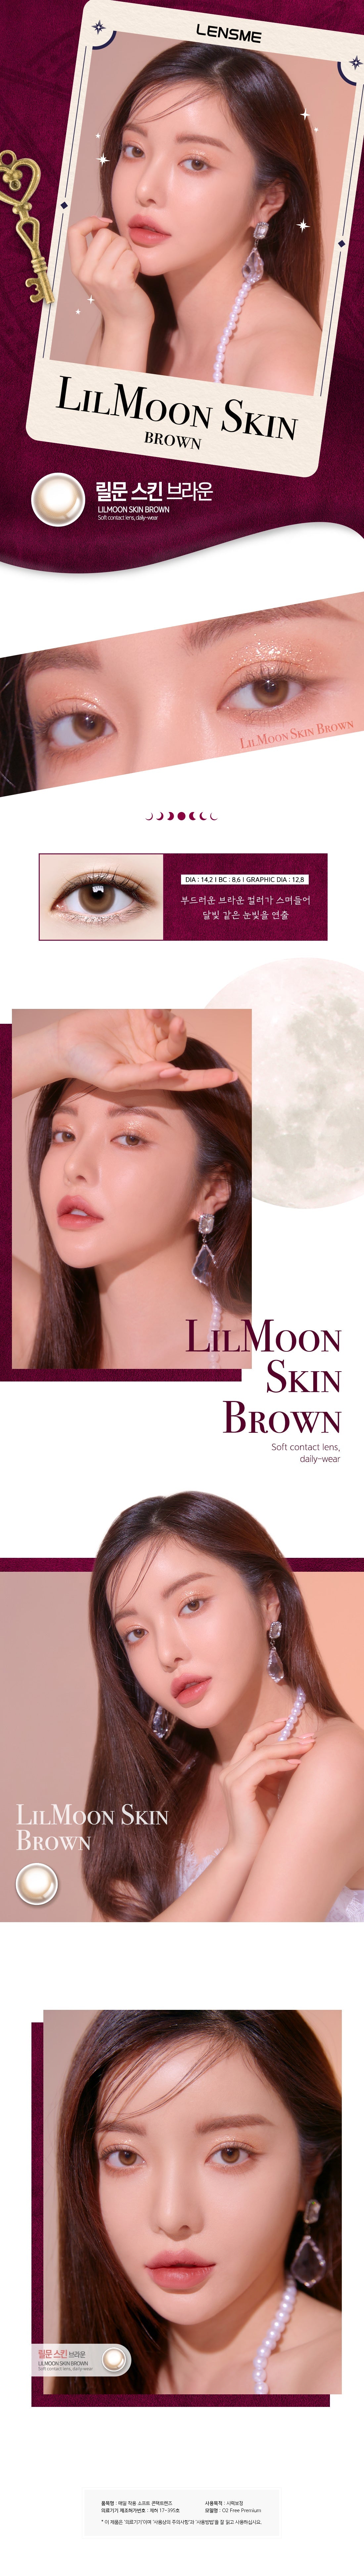 [Ready] LensMe Lil Moon Skin Brown | 1 Month